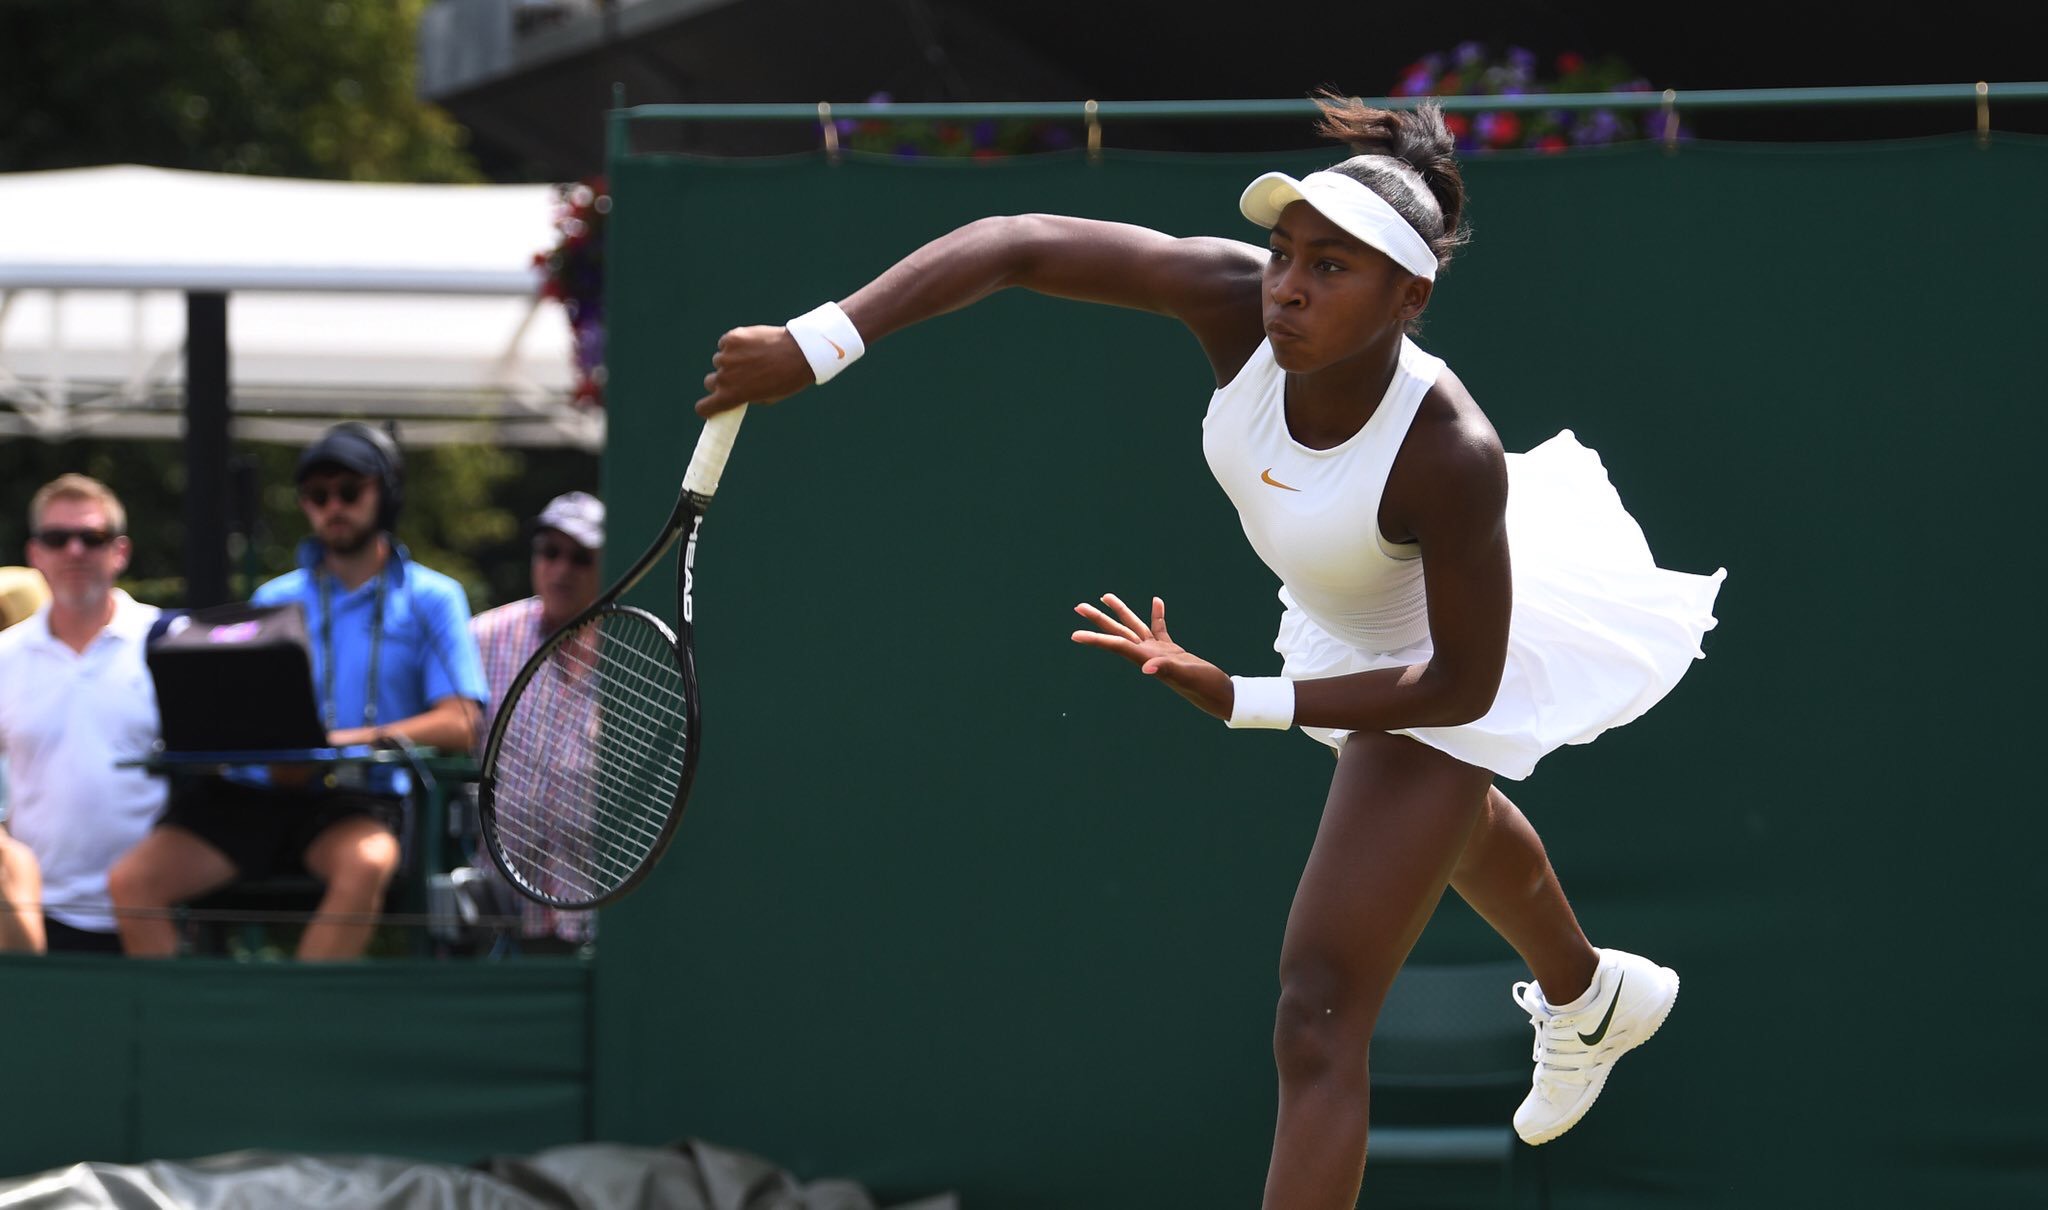 Teenager Gauff knocks Venus out of Wimbledon